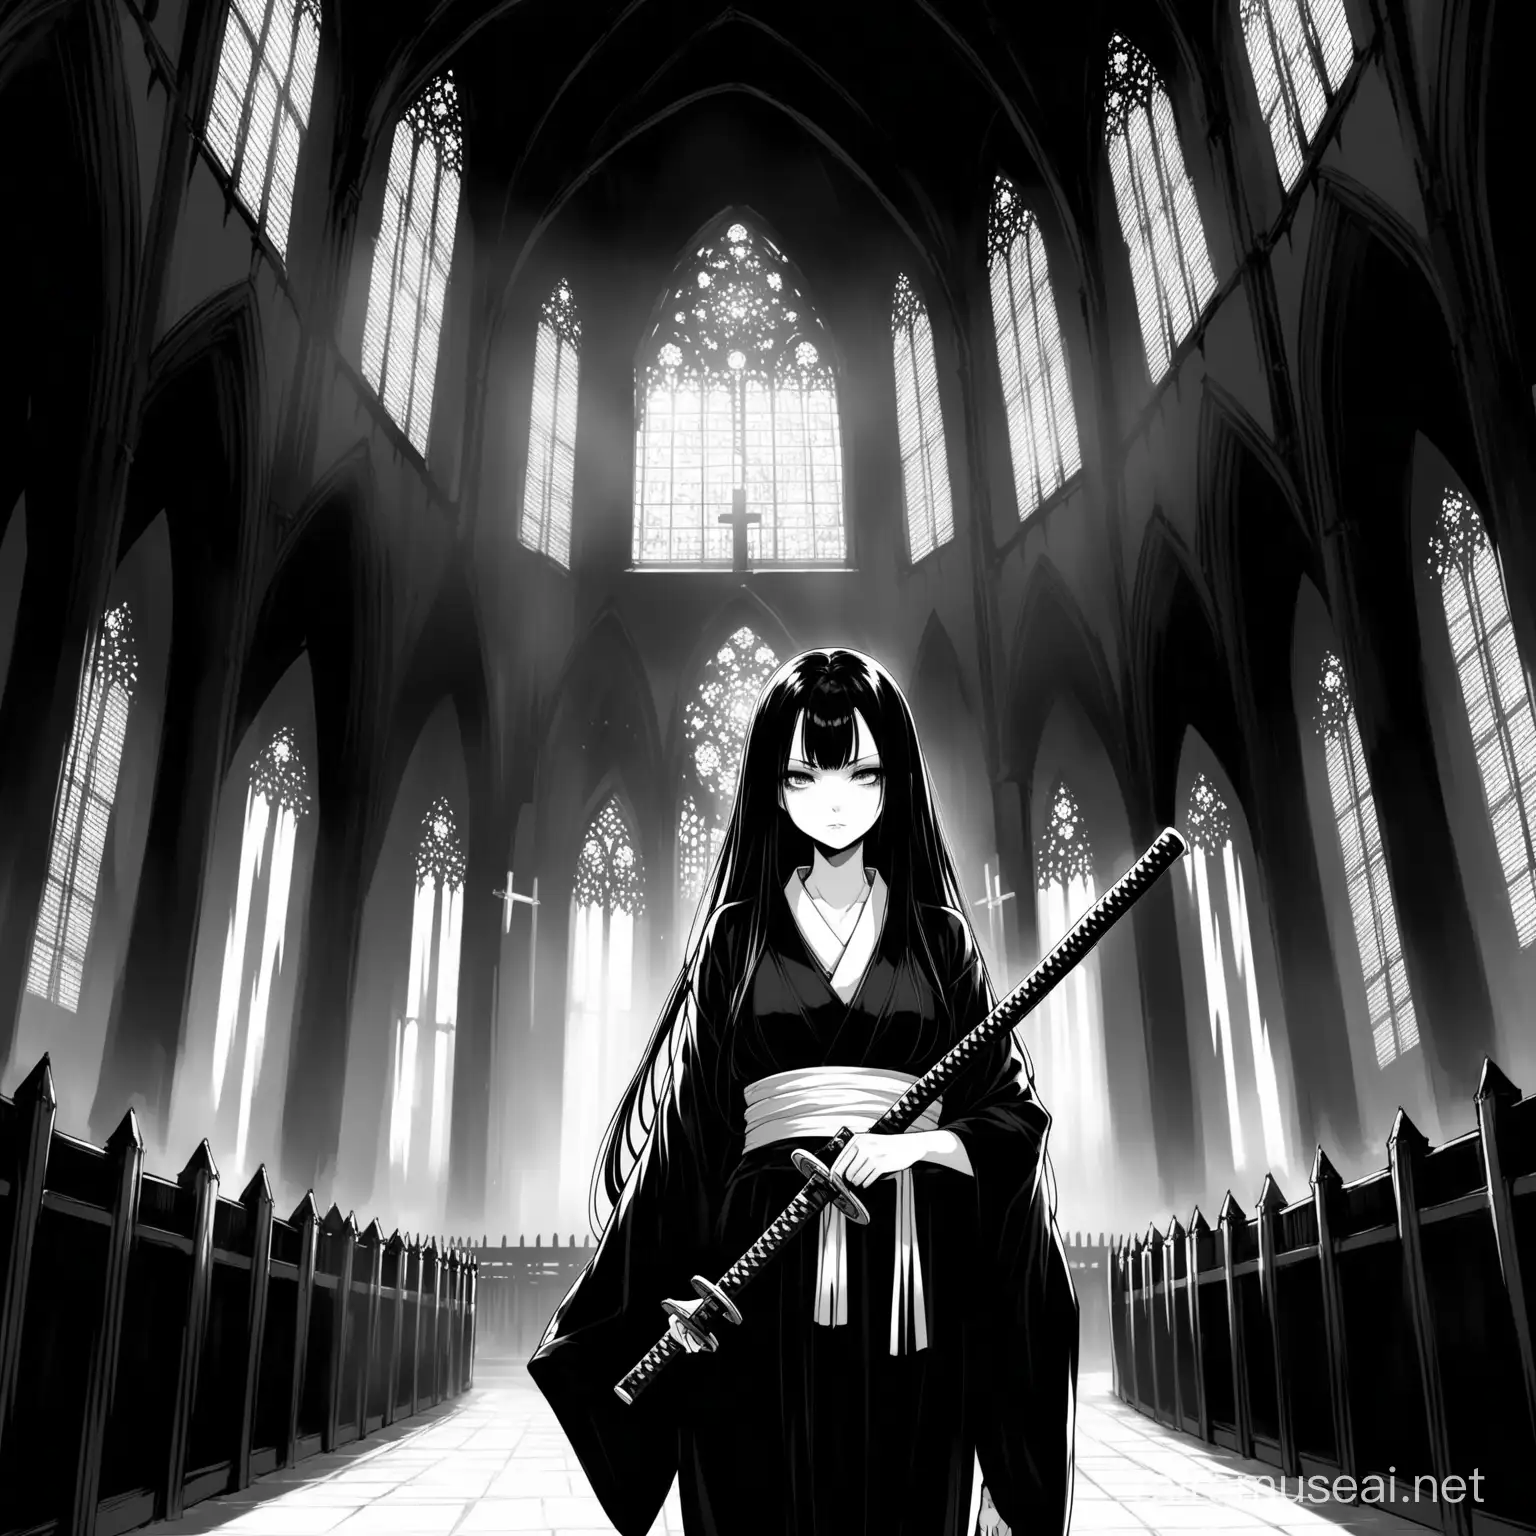 Paleskinned Anime Girl in Gothic Kimono with Katana at Black and White Gothic Church